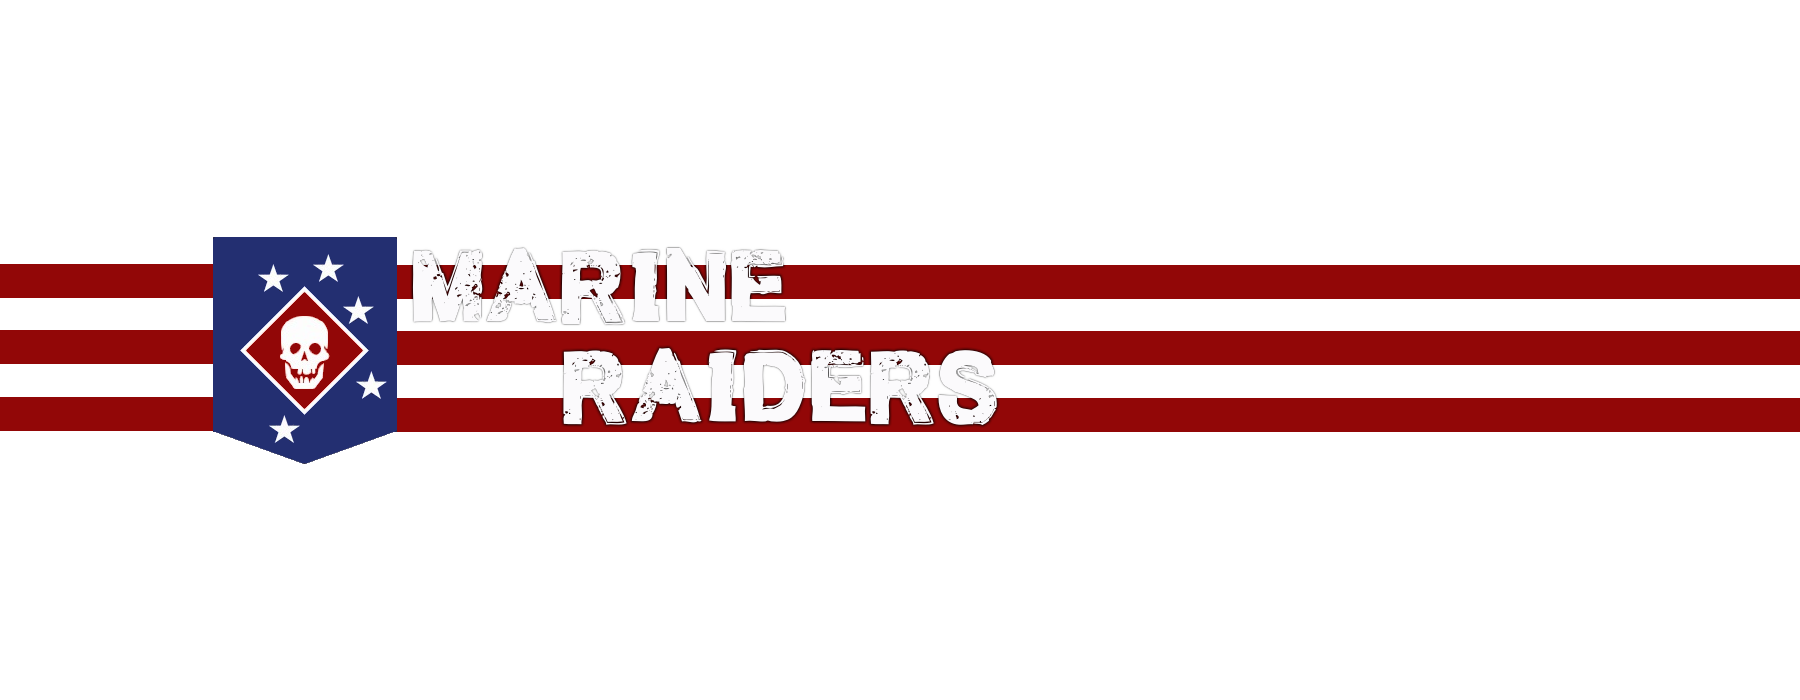 Marine Raiders